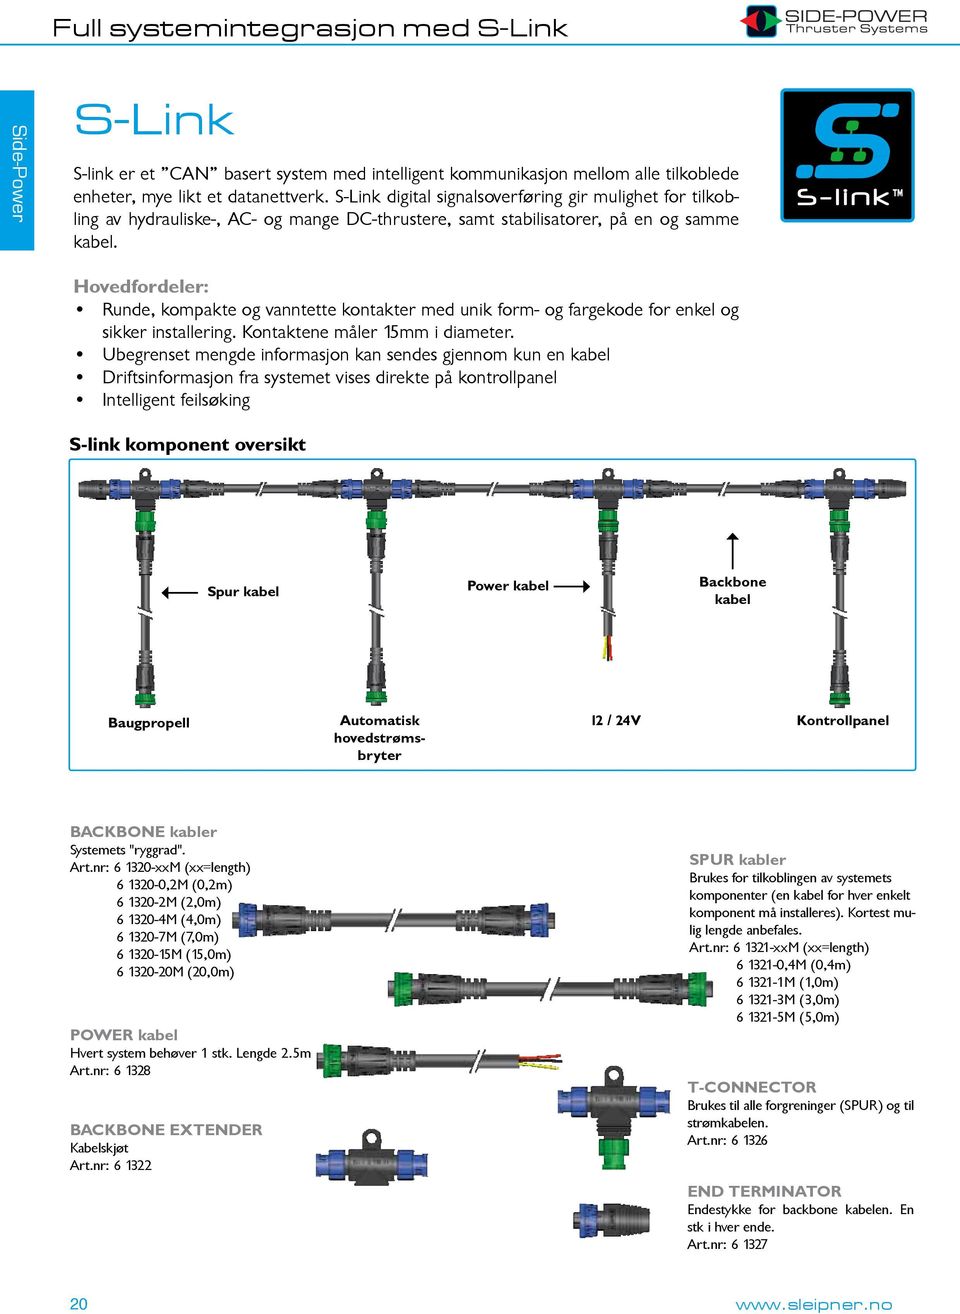 Wiring of S-link syst Hovedfordeler: Runde, kompakte og vanntette kontakter med unik form- og fargekode for enkel og sikker Wiring installering.